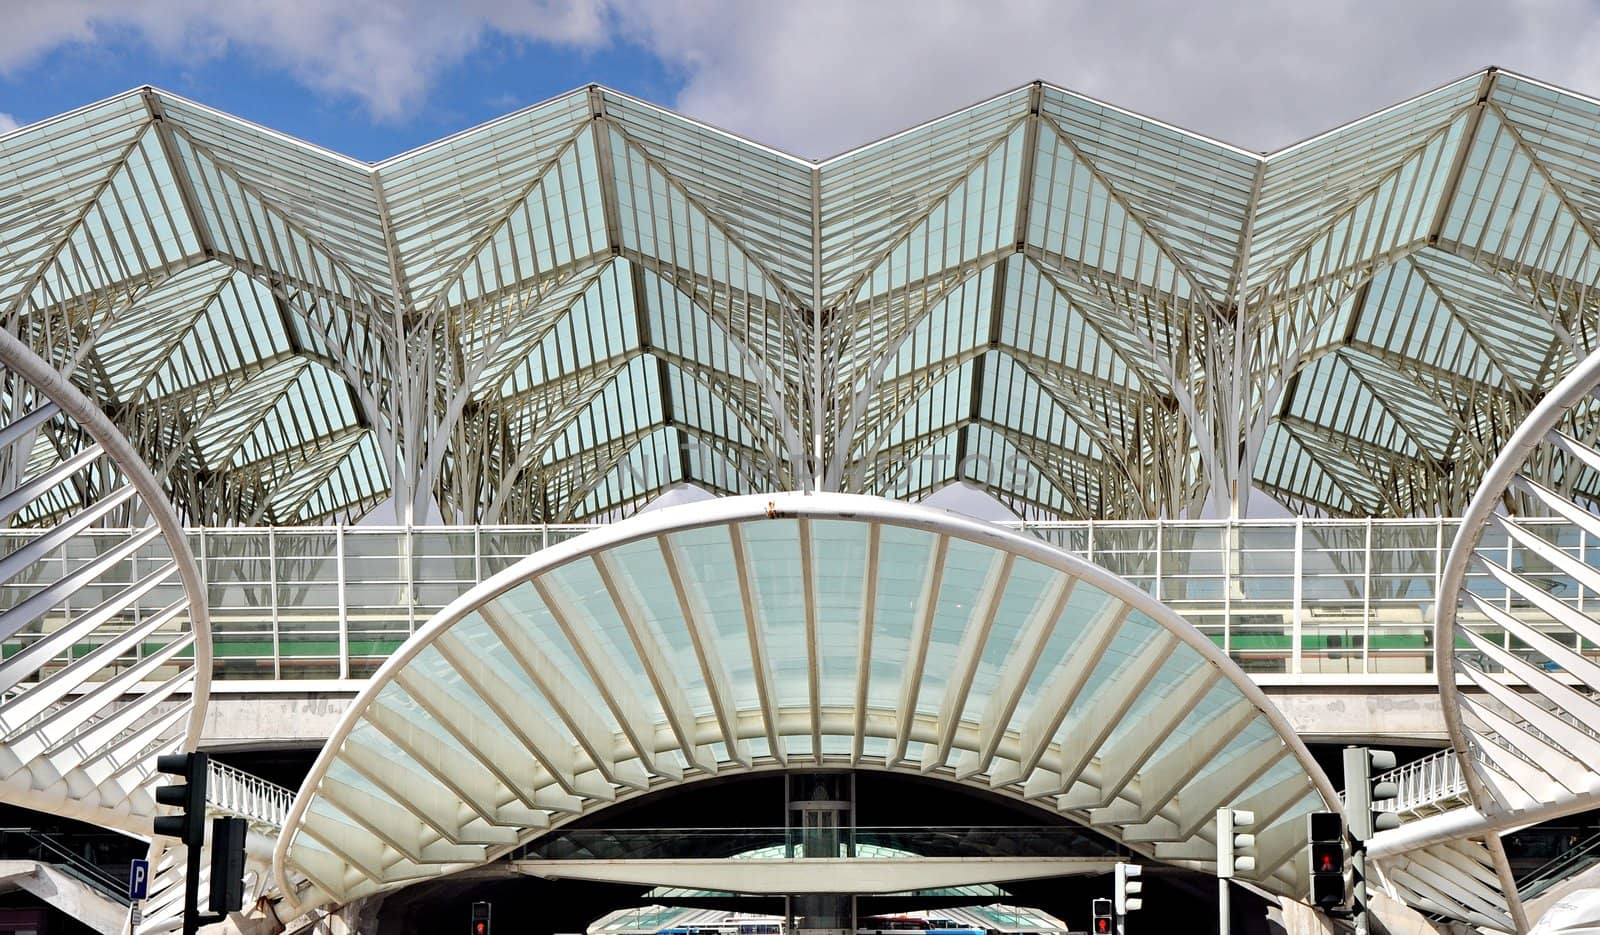 Gare de Oriente railway station, Lisbon, Portugal by anderm